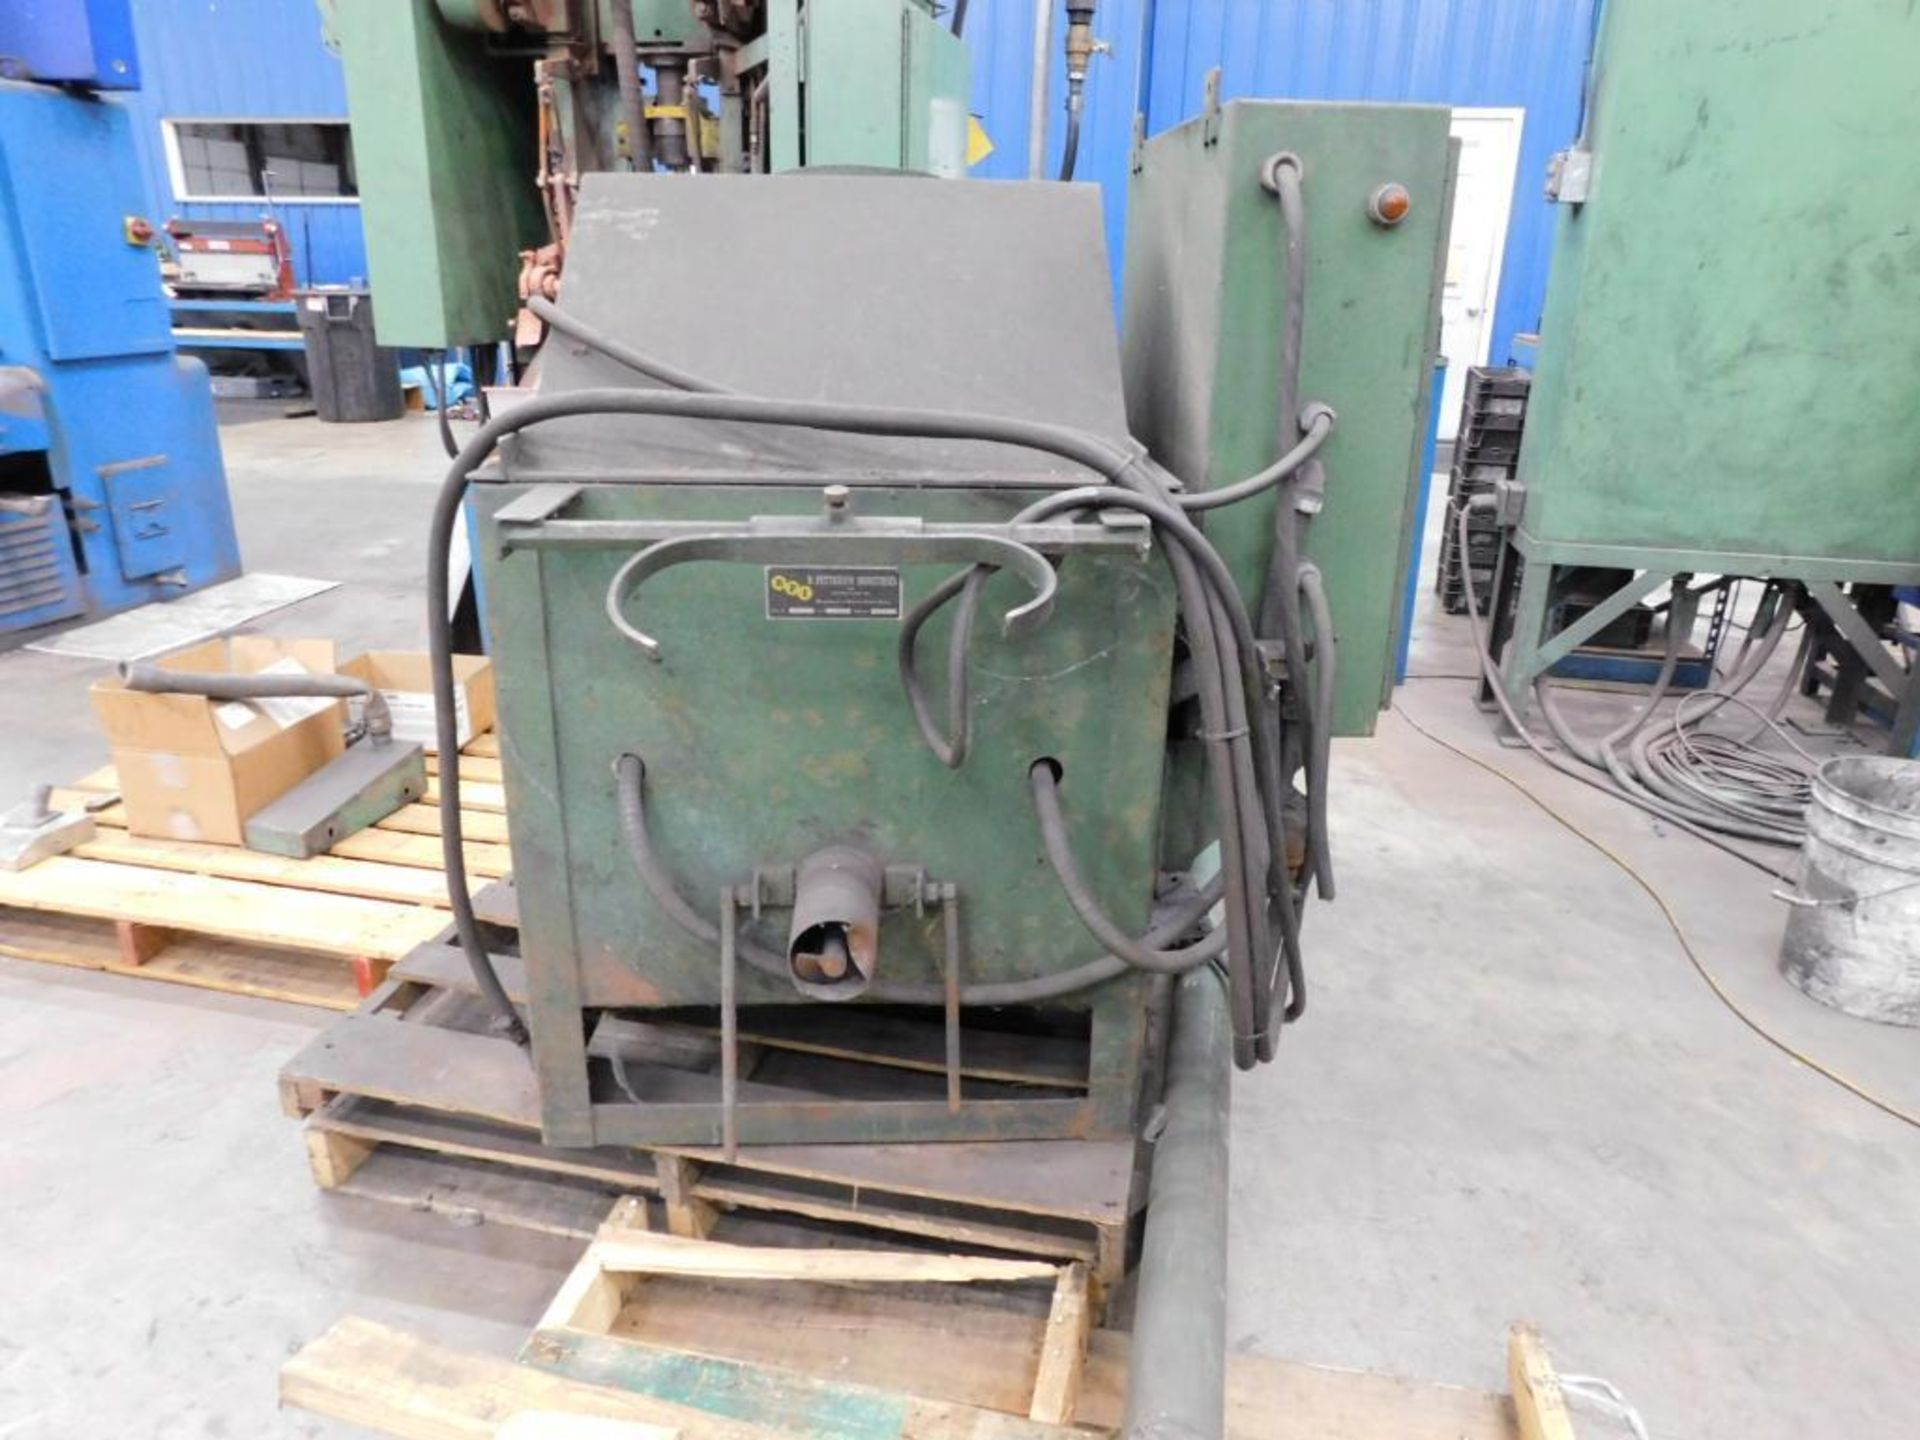 Gasbarre Powder Compacting Press, Mechanical, Model 30 Standard, S/N: 86256, 30 Ton Maximum Pressing - Image 16 of 22